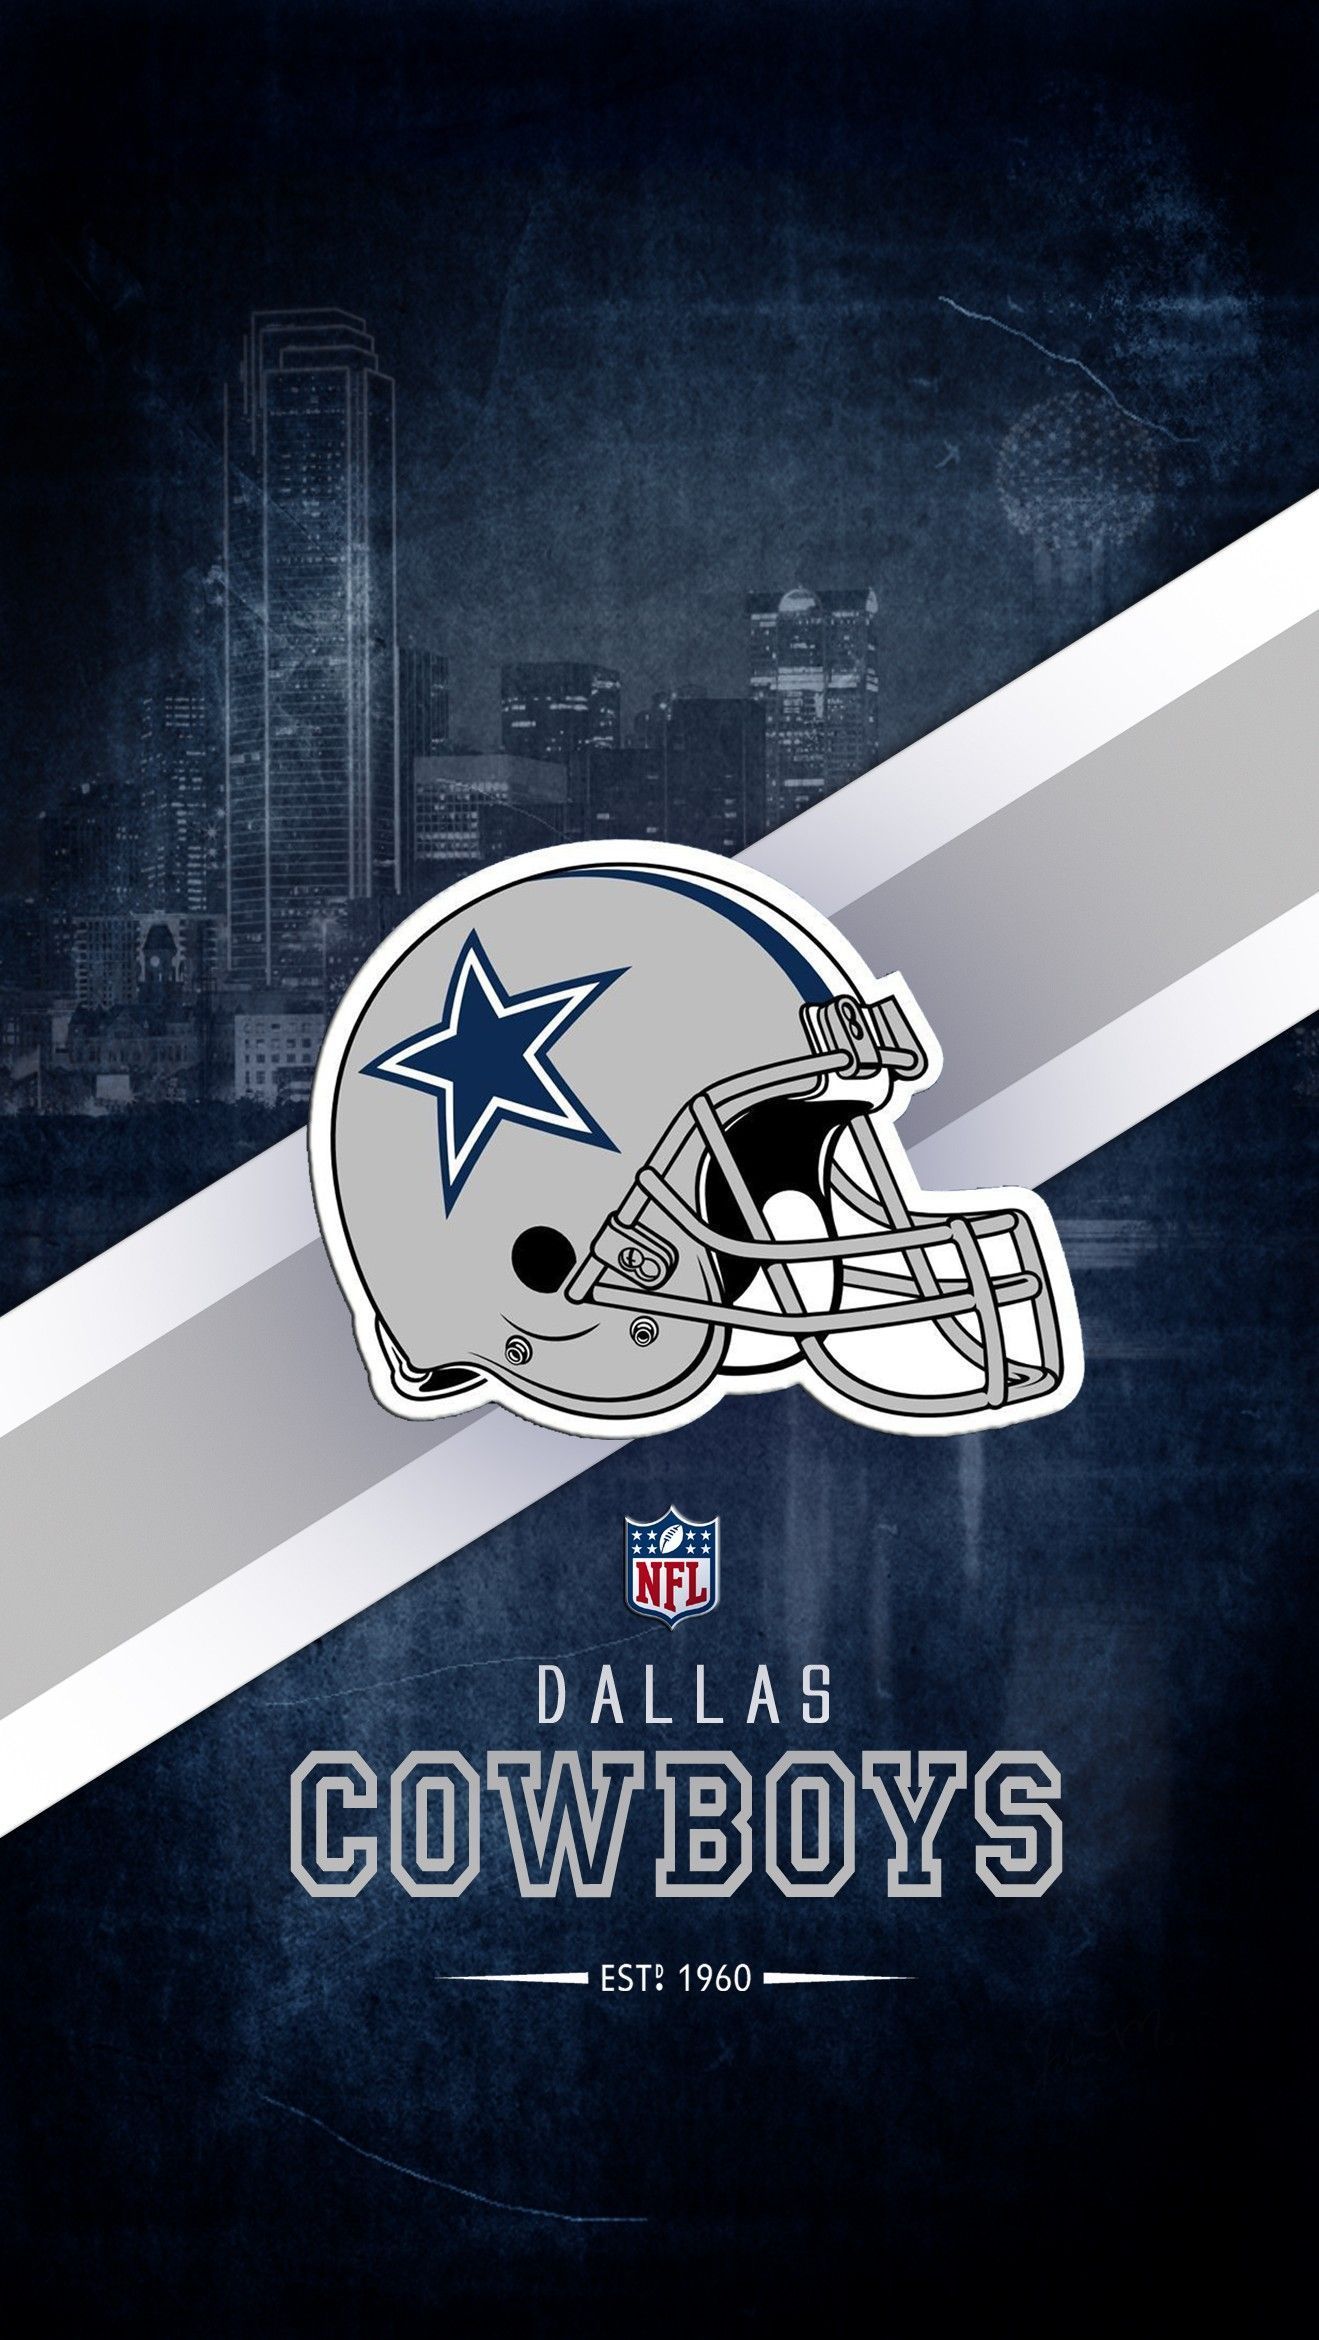 Cowboys wallpaper, #americanfootballfondos #Cowboys #Wallpaper. Dallas cowboys wallpaper, Dallas cowboys, Dallas cowboys fans